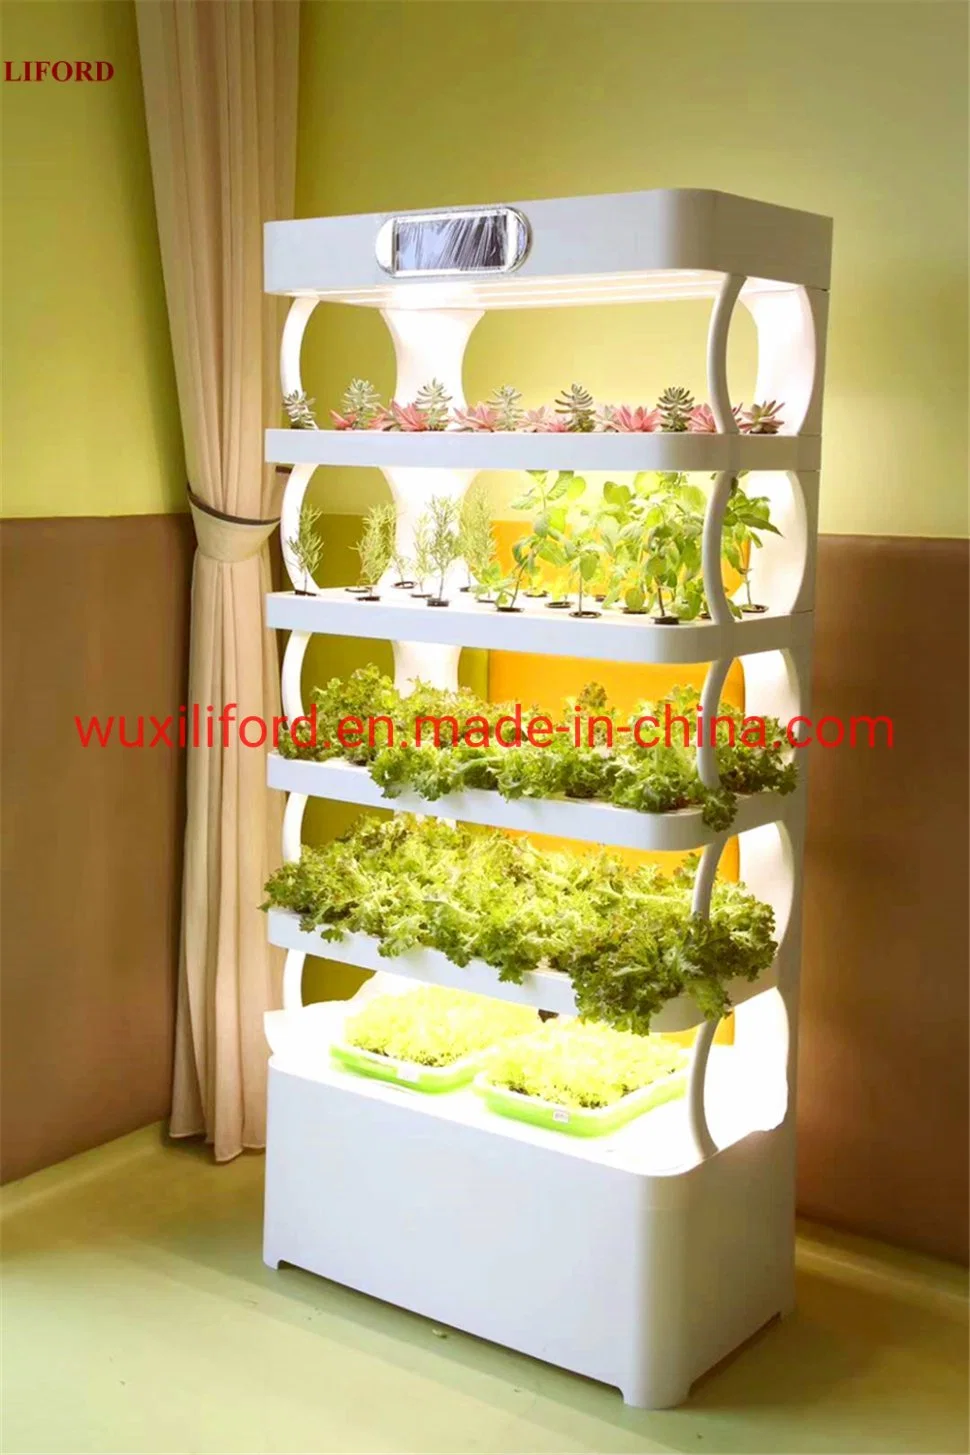 Safe Portable Professional Smart Farm LED Hydroponics Systems for Lettuce